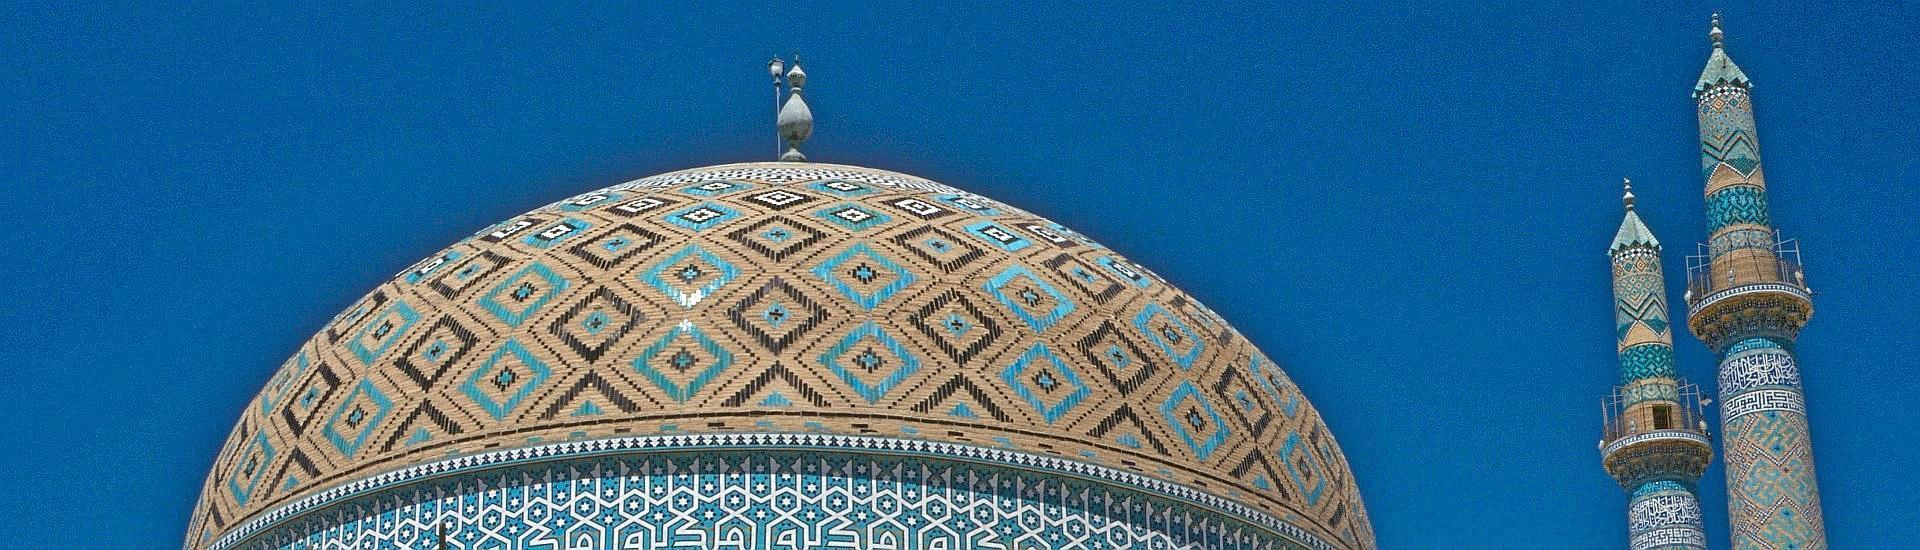 zz_Iran -  błękit perskiej mozaiki